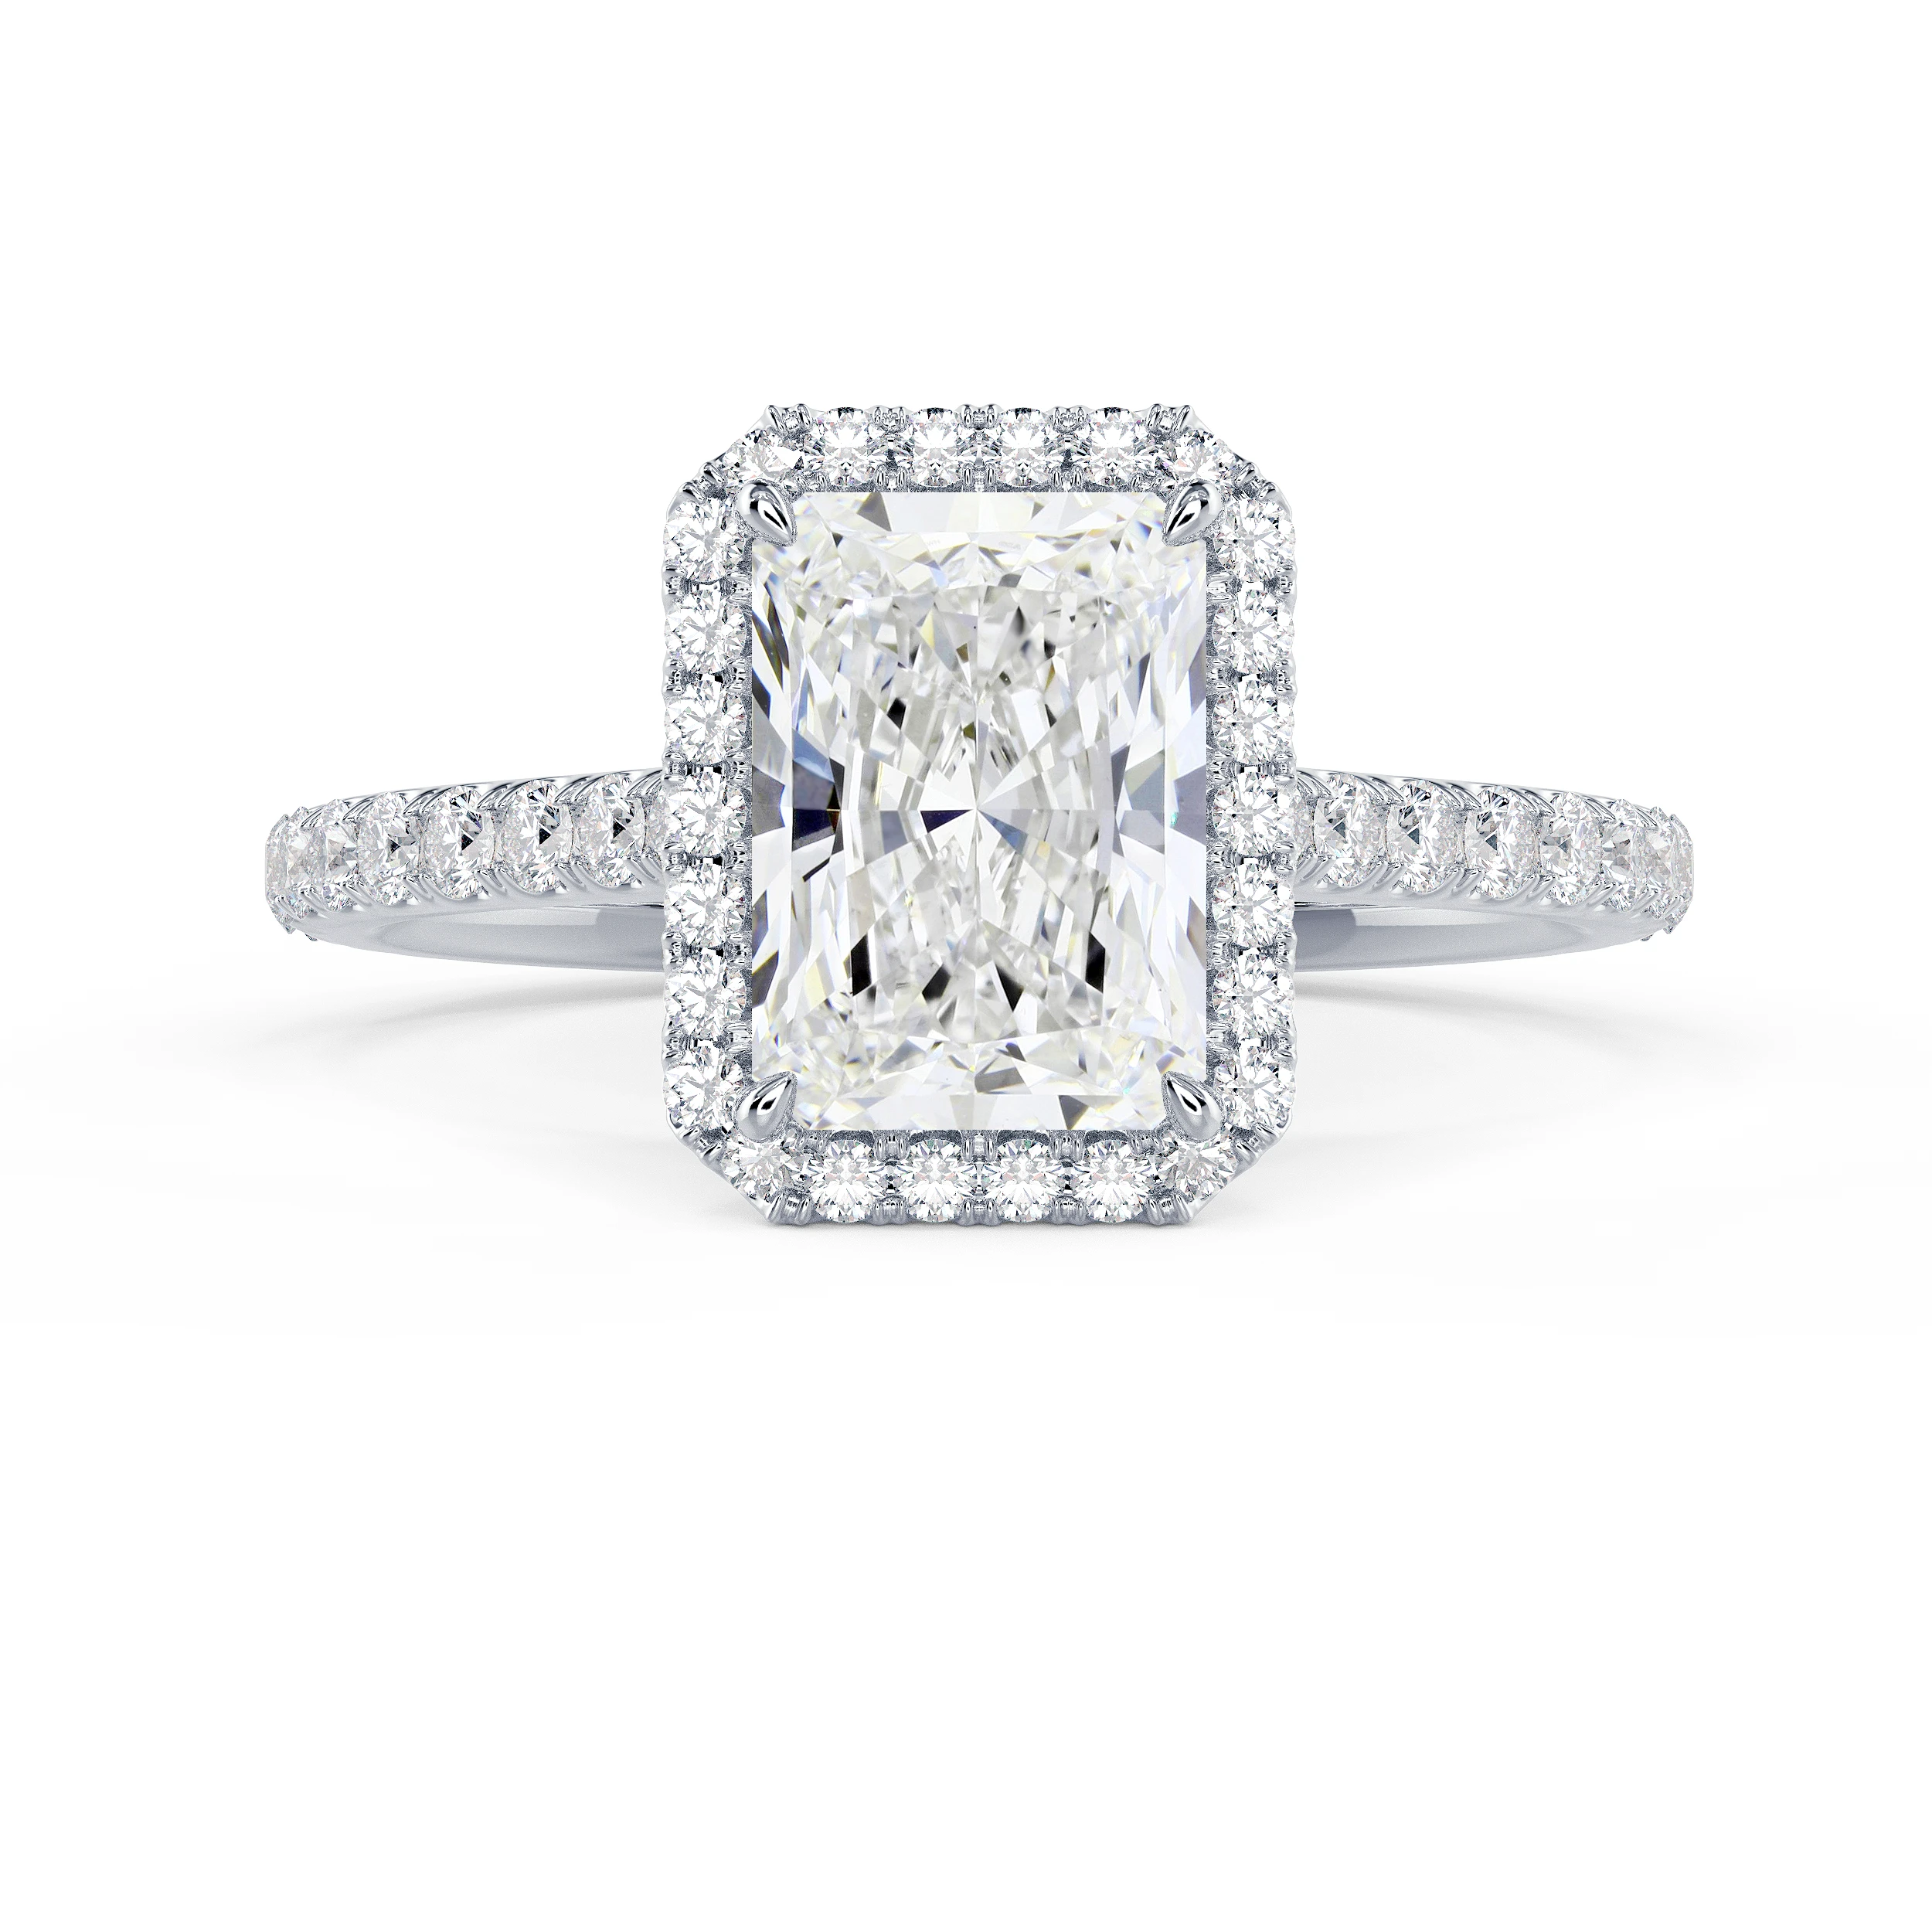 18k White Gold Radiant Halo Pavé Diamond Engagement Ring featuring 2.0 Carat Diamonds (Main View)